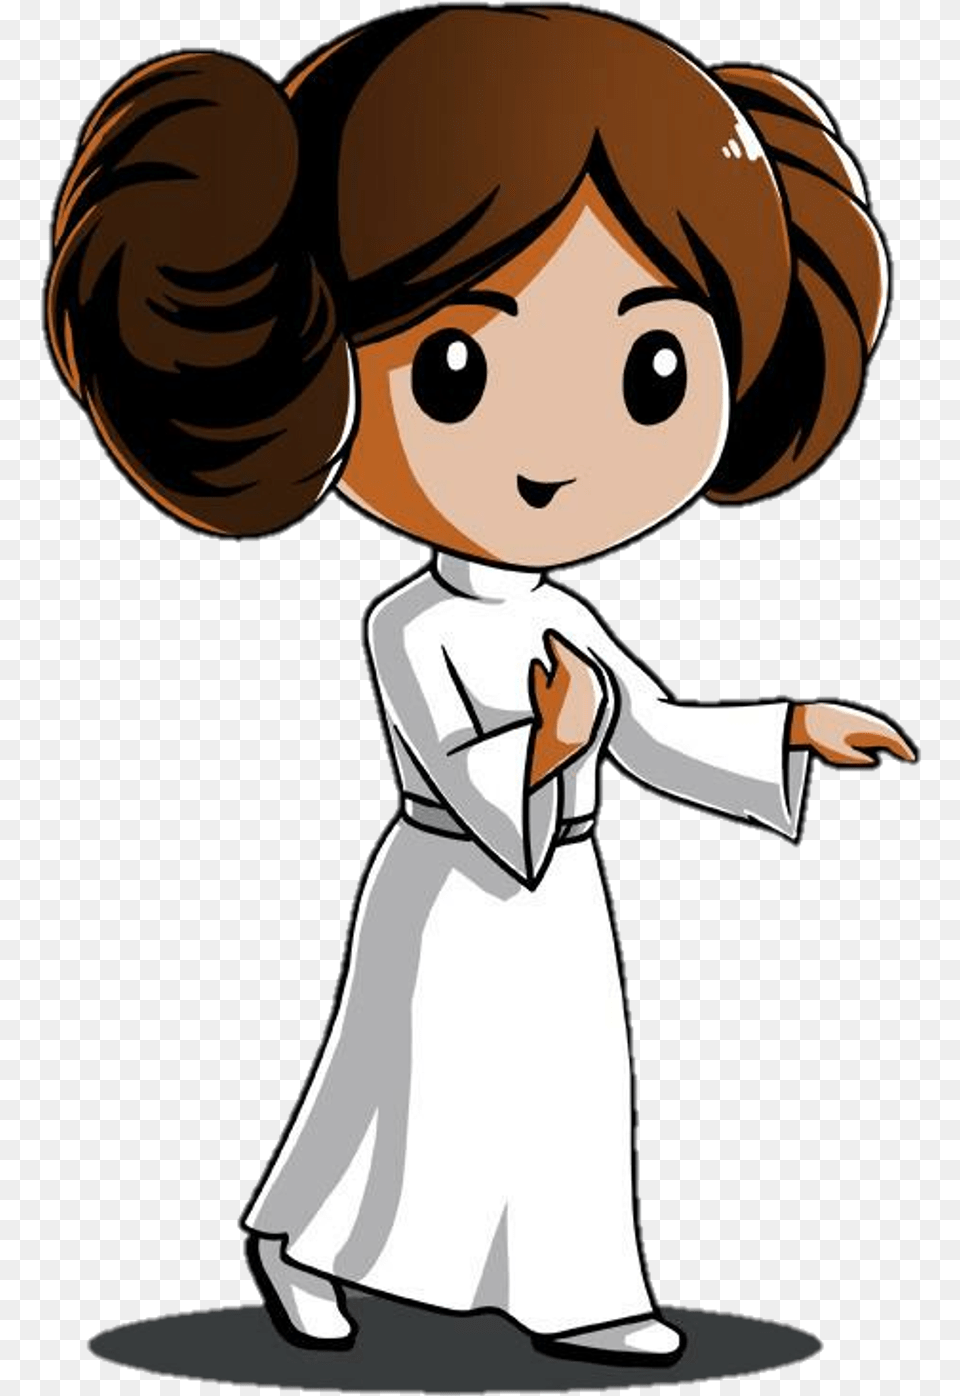 Dibujos De Star Wars Kawaii Leia Clipart Star Wars Cartoon Princess Leia, Person, Book, Comics, Publication Free Transparent Png